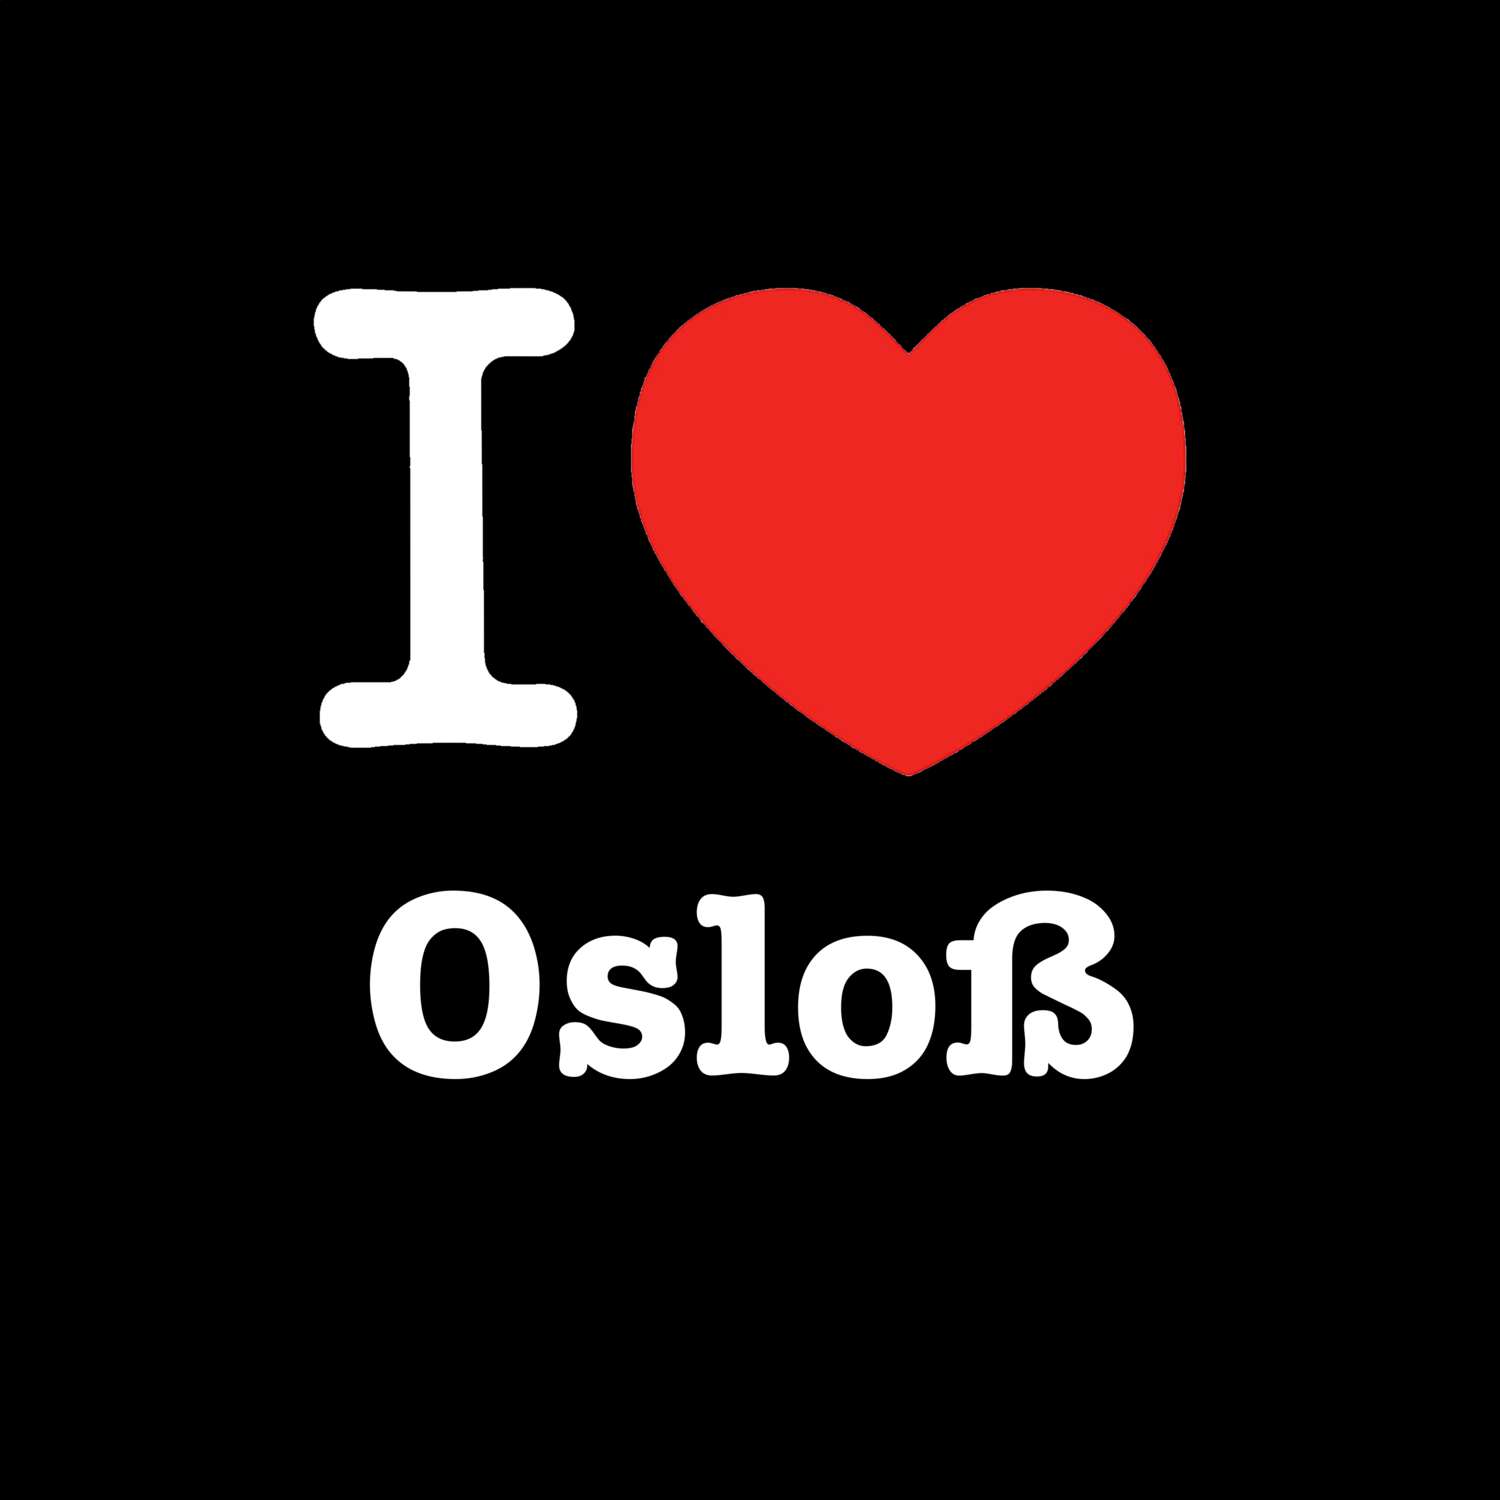 Osloß T-Shirt »I love«